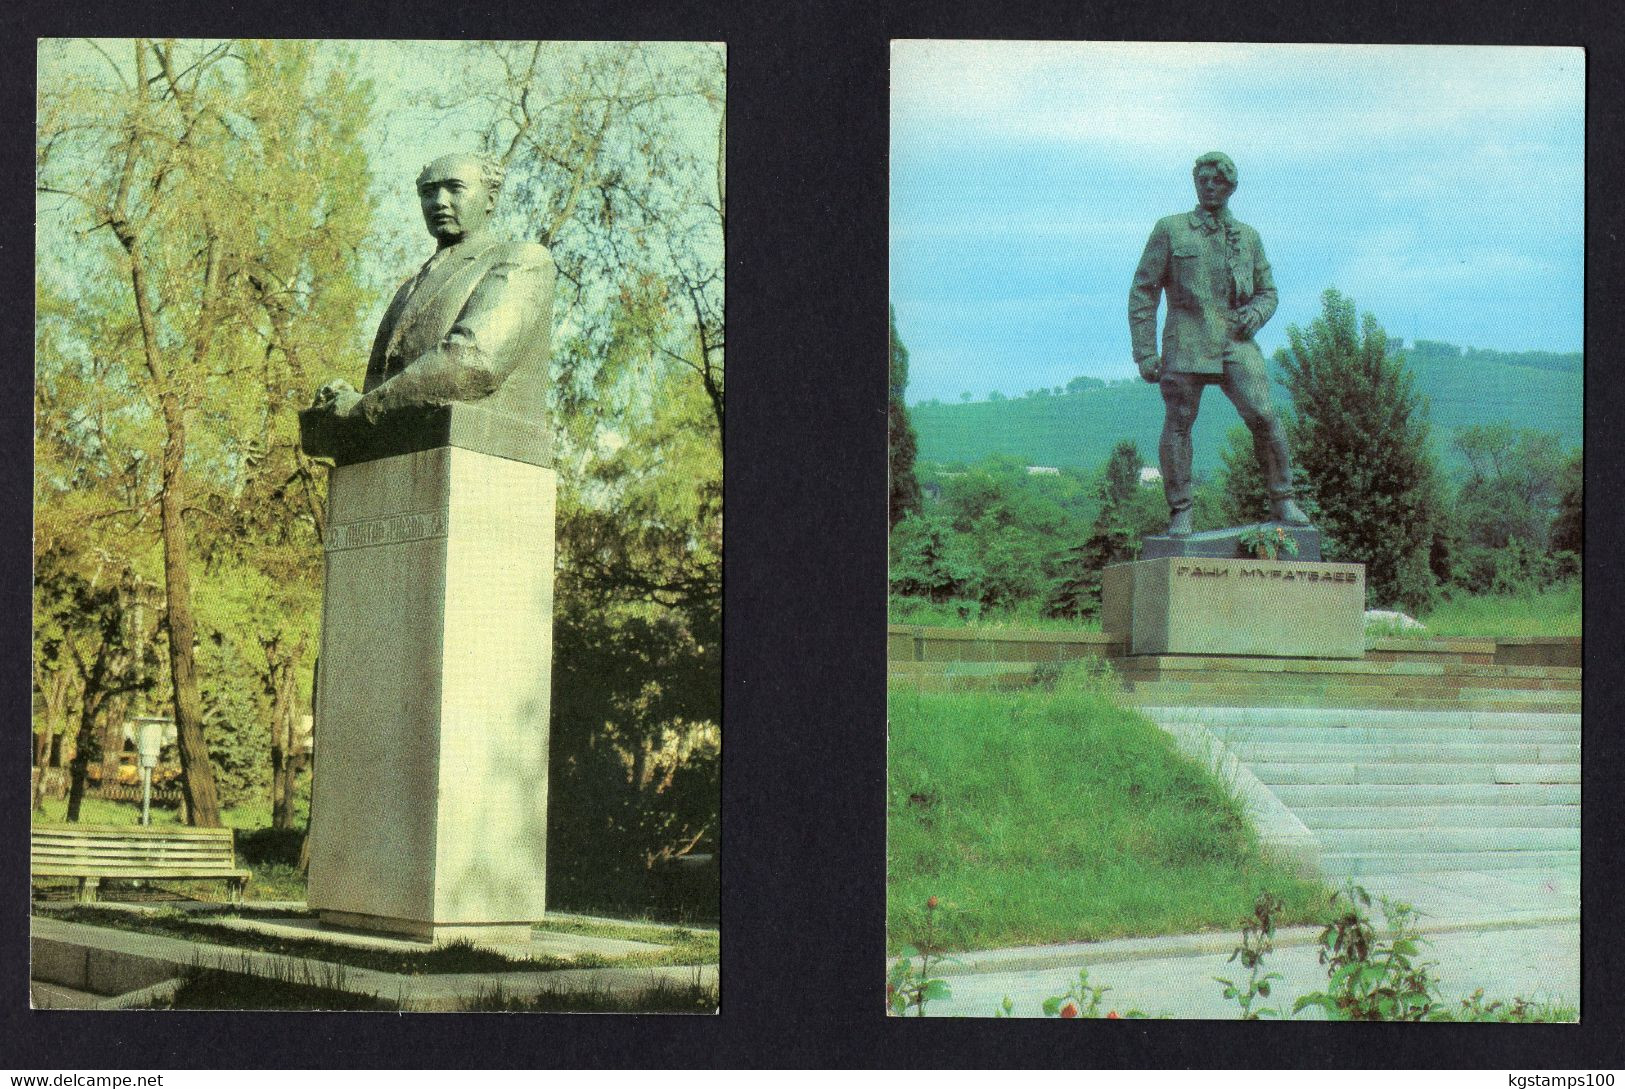 Kazakhstan 1988-89. Alma-Ata. Monuments To Auezov & Muratbaev. 2 Postcards** - Kazakhstan